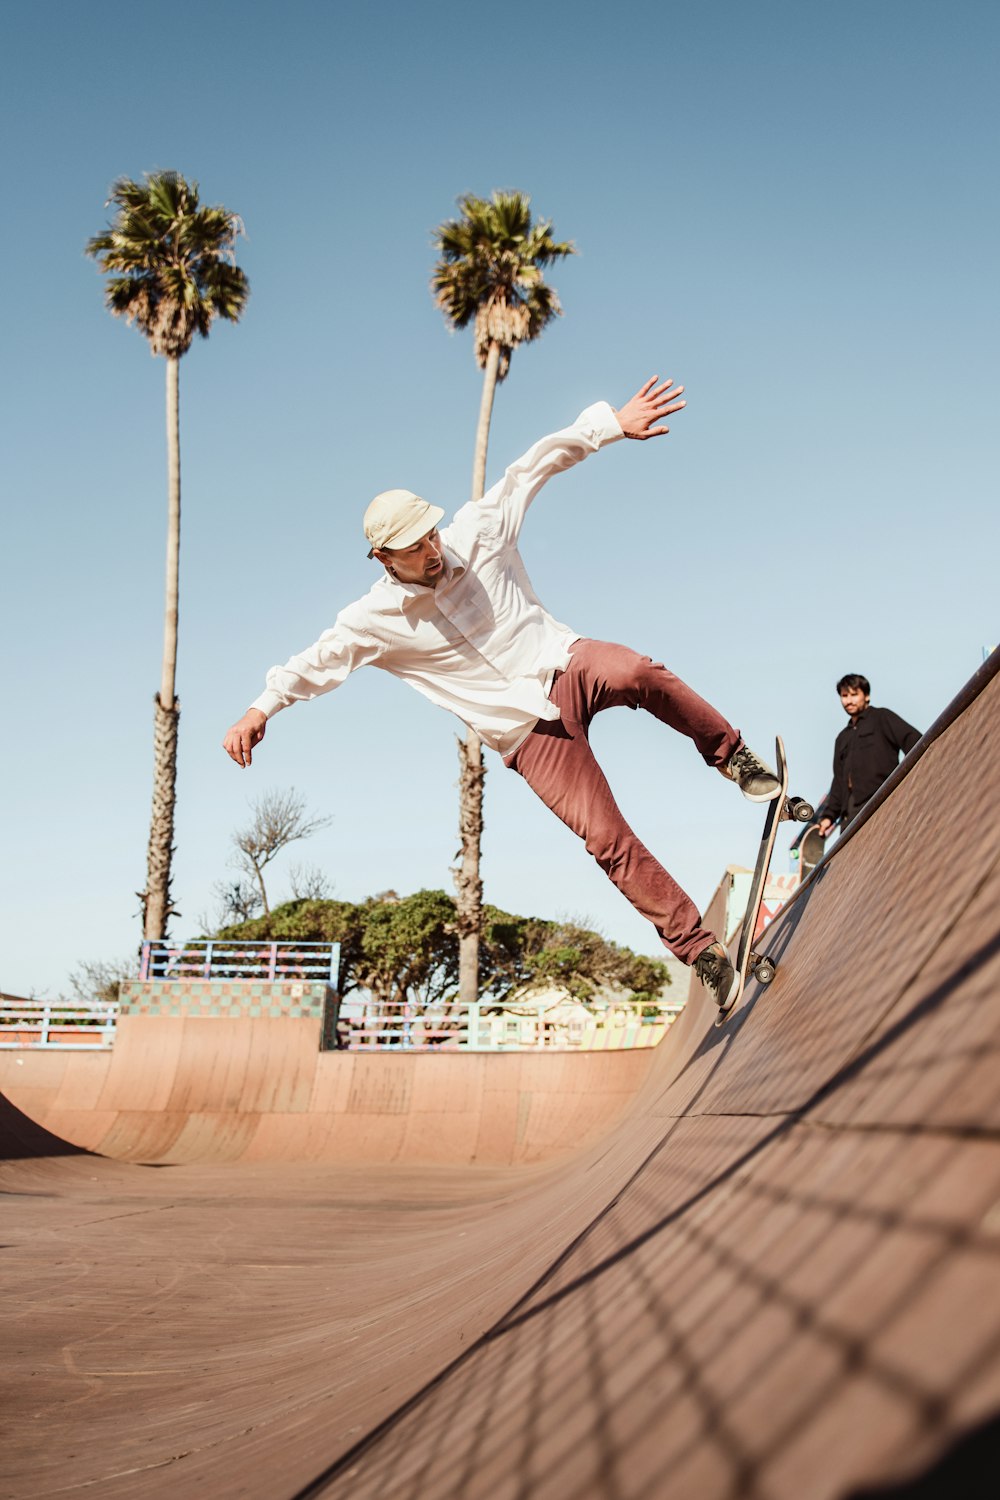 man in white shirt and brown pants riding skateboard during daytime